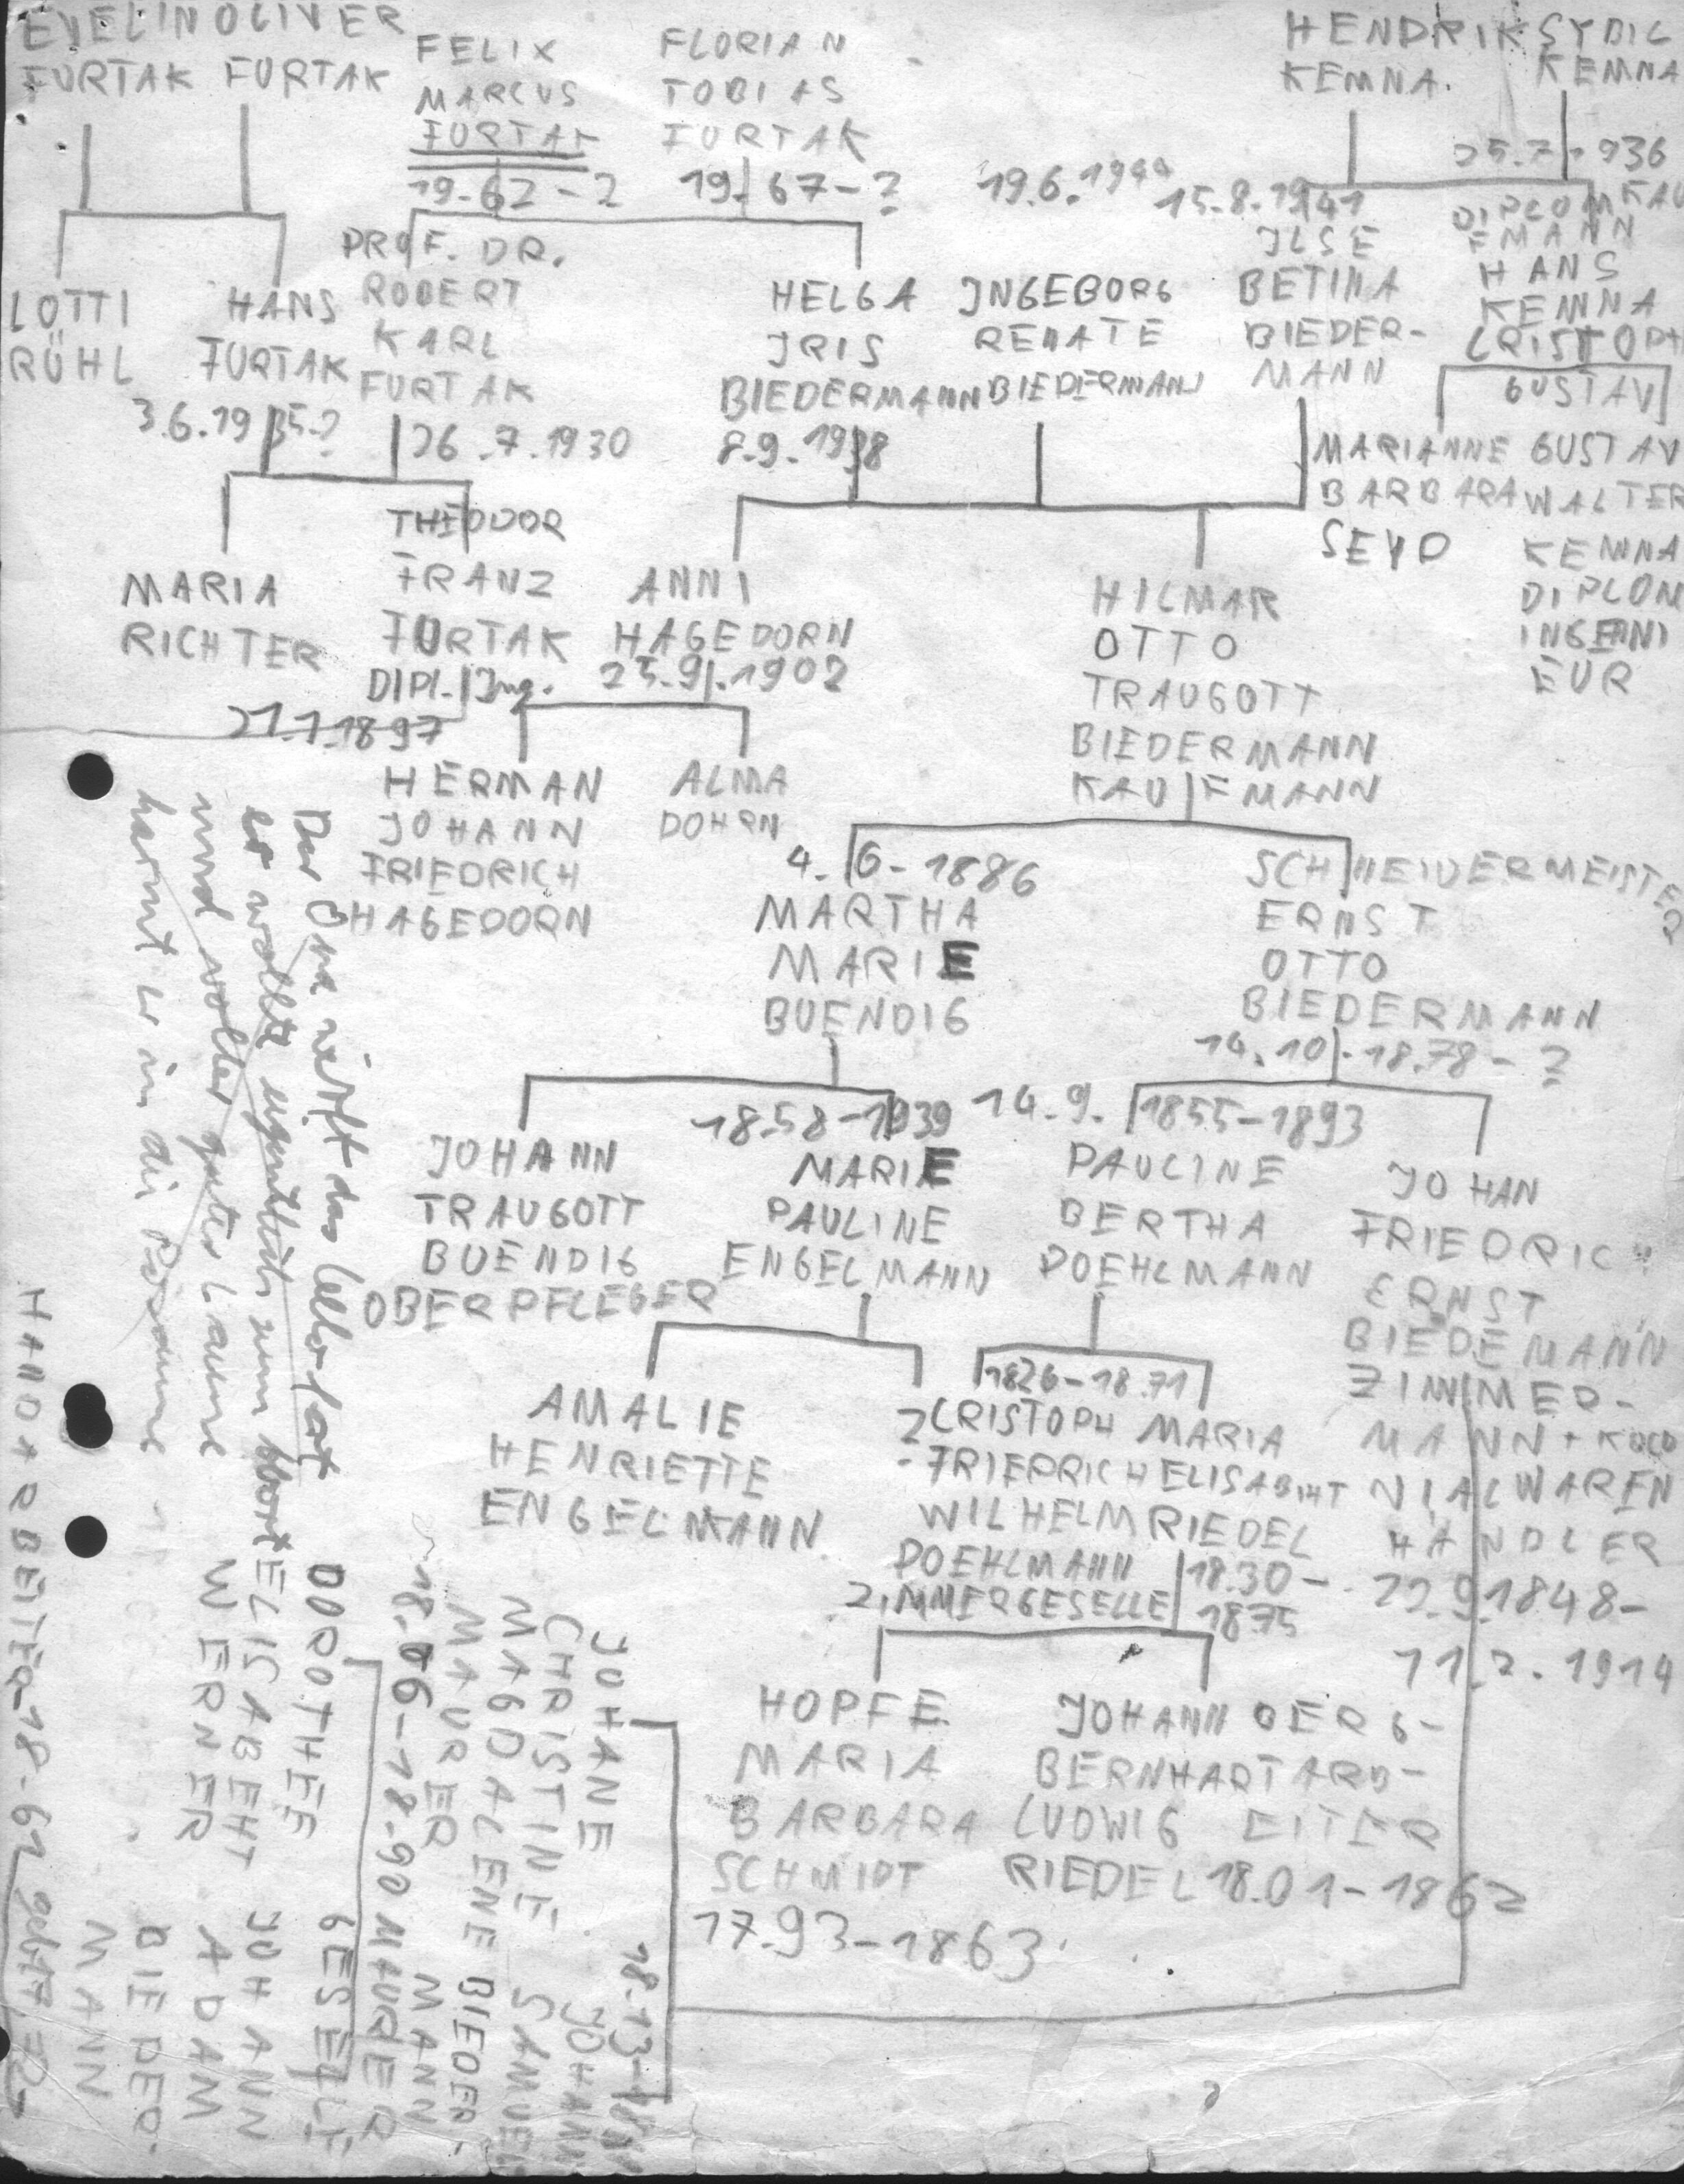 Furtak Family tree